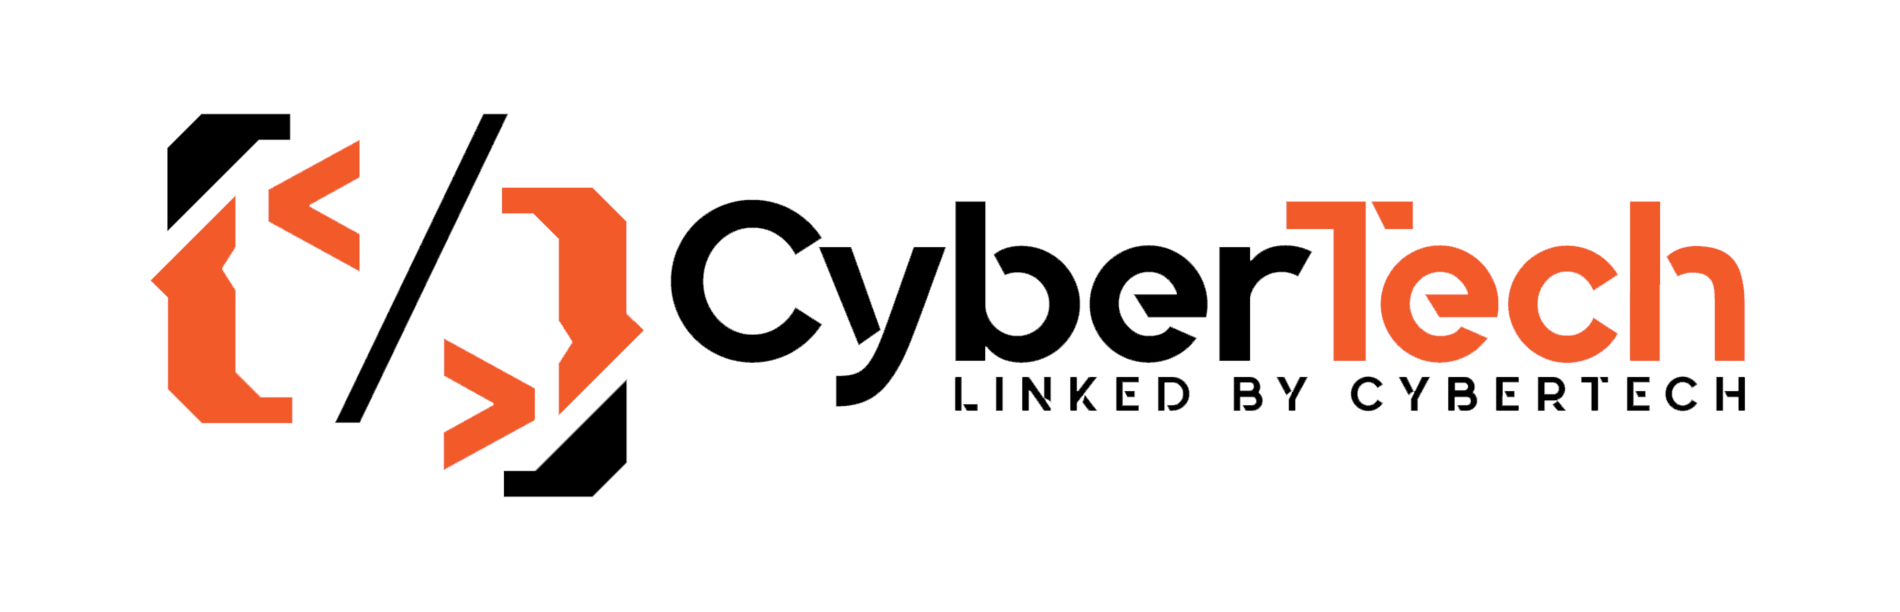 cybertech_logo_upscaled.png